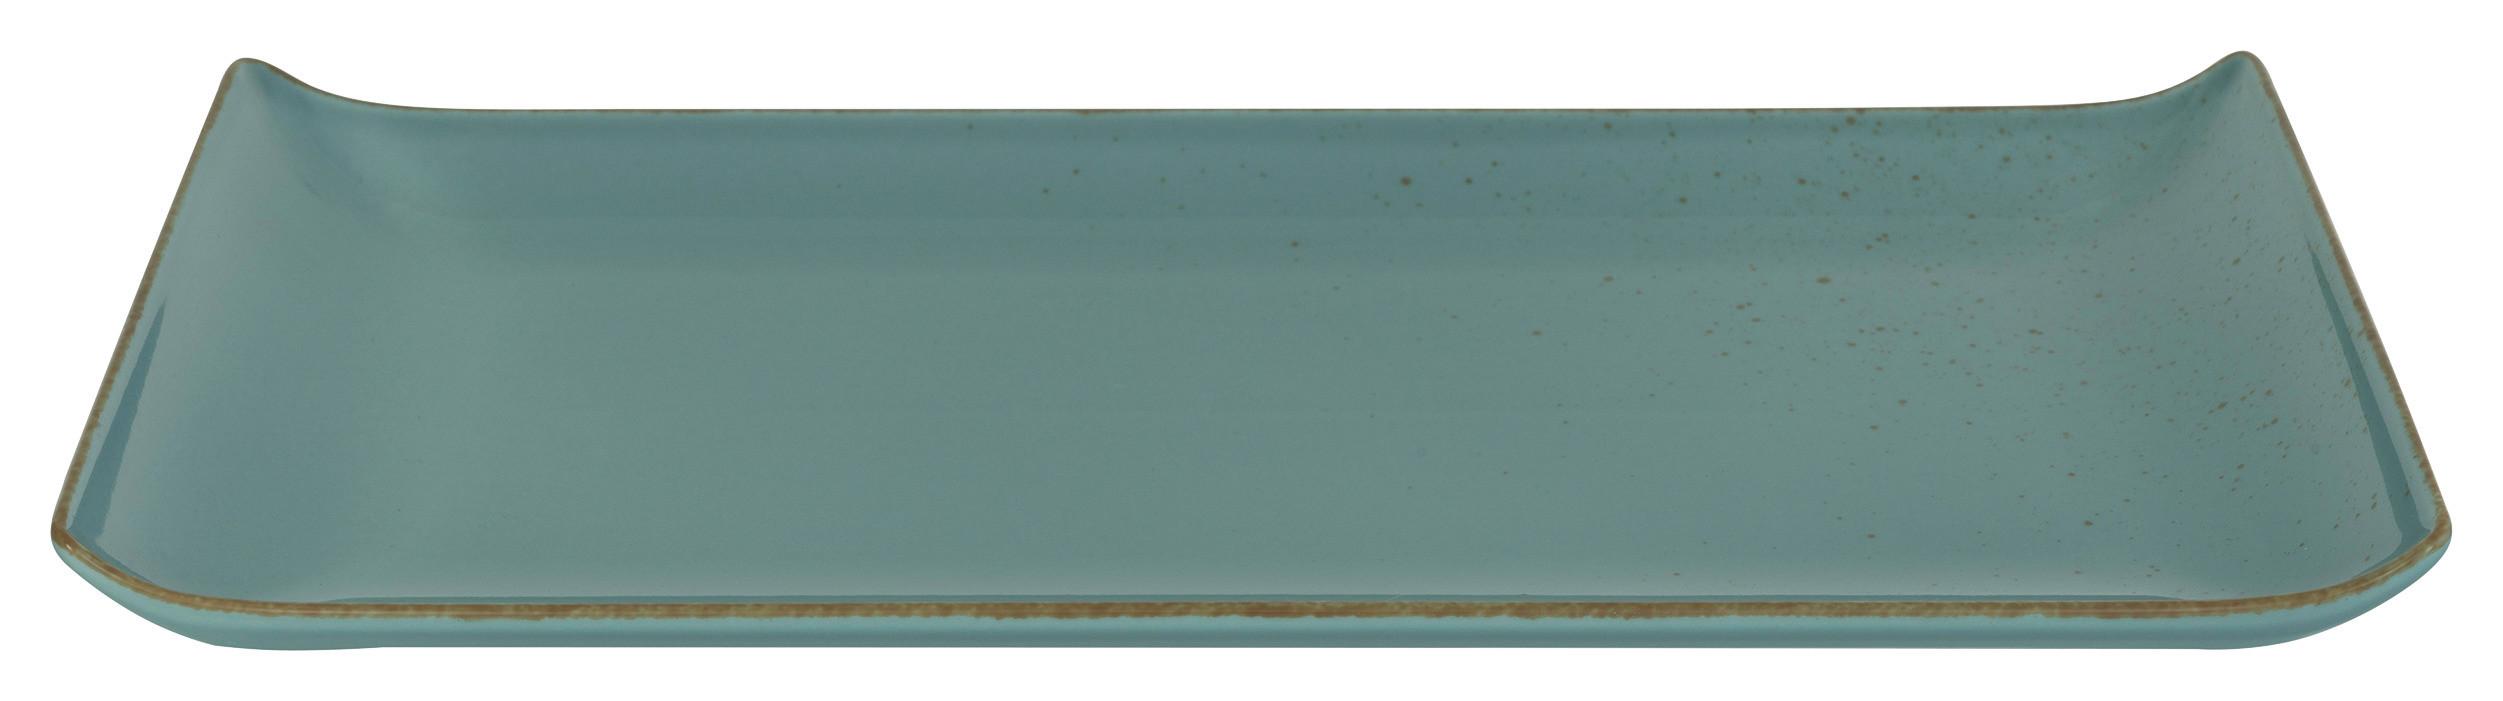 Servierplatte Capri in Grün - Grün, Modern, Keramik (32/16,5/2cm) - Premium Living